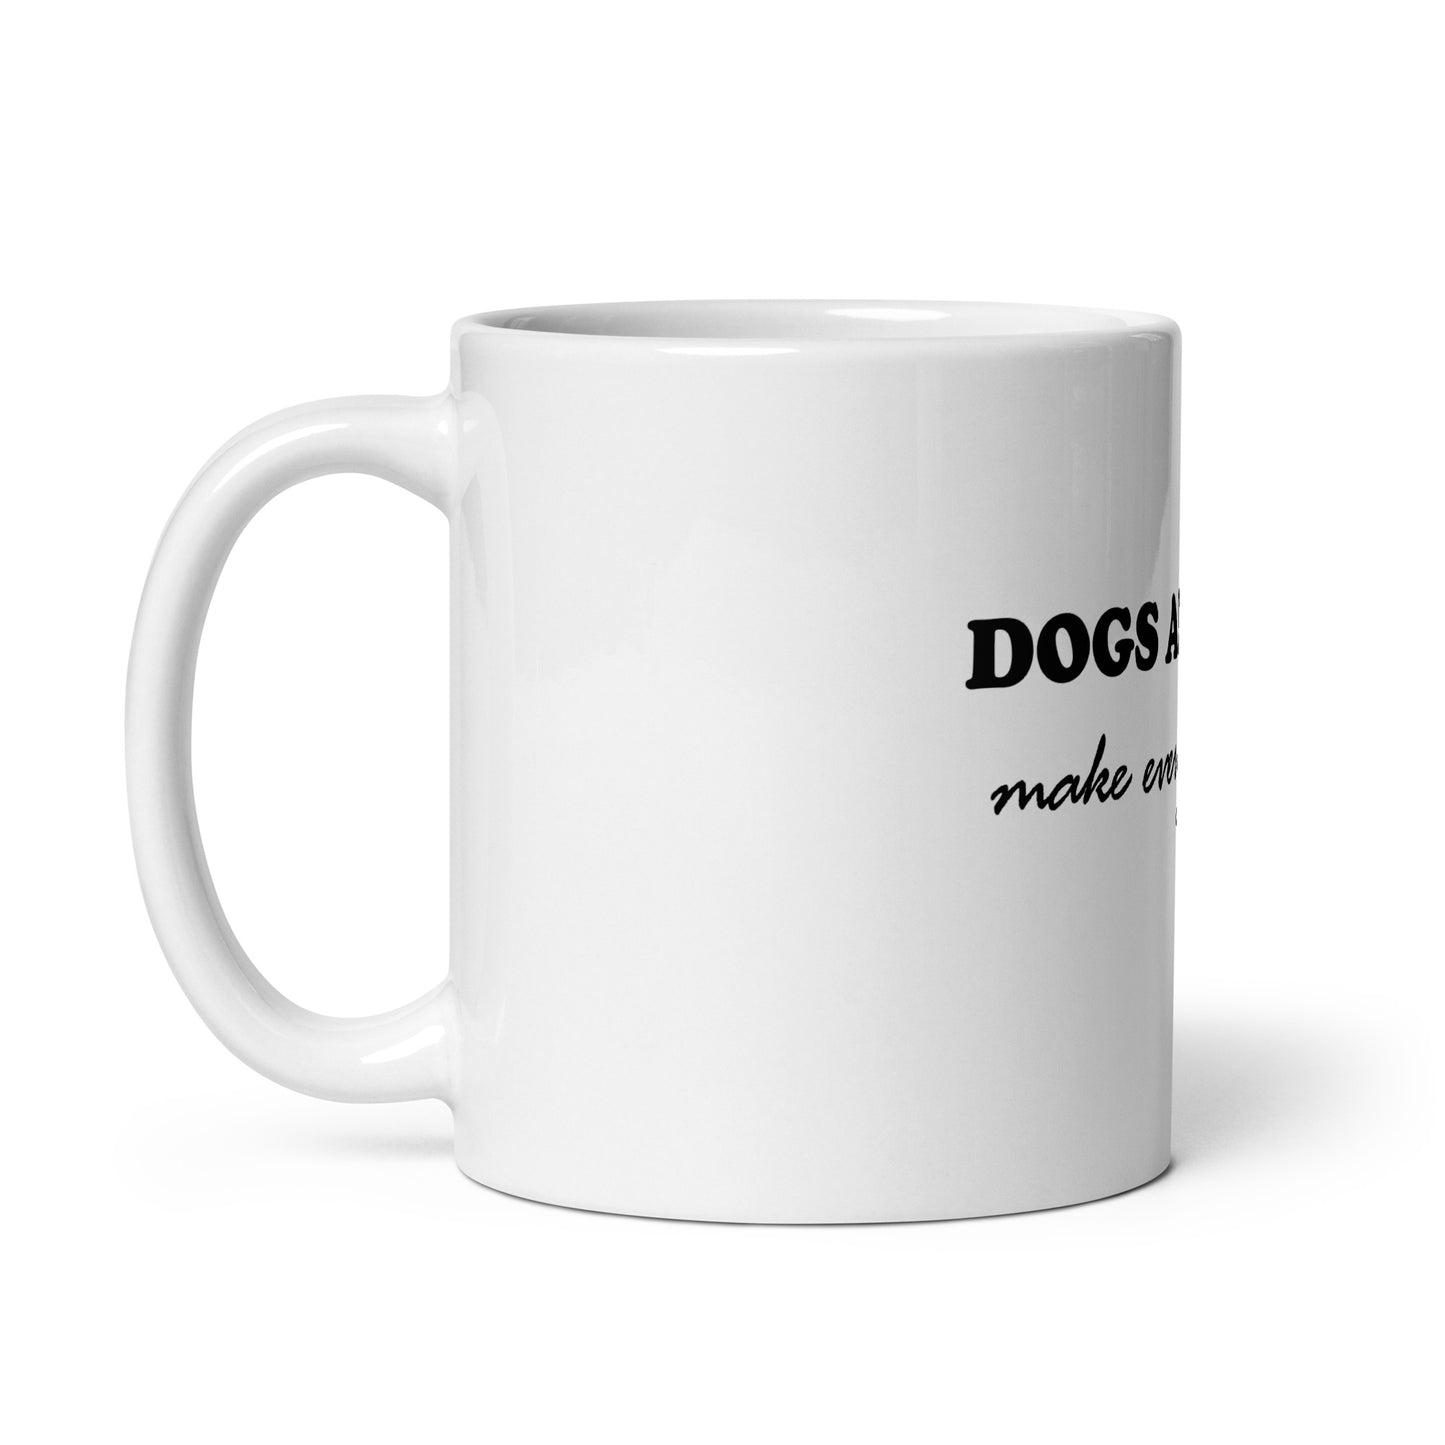 DOGS AND WINE - Mug